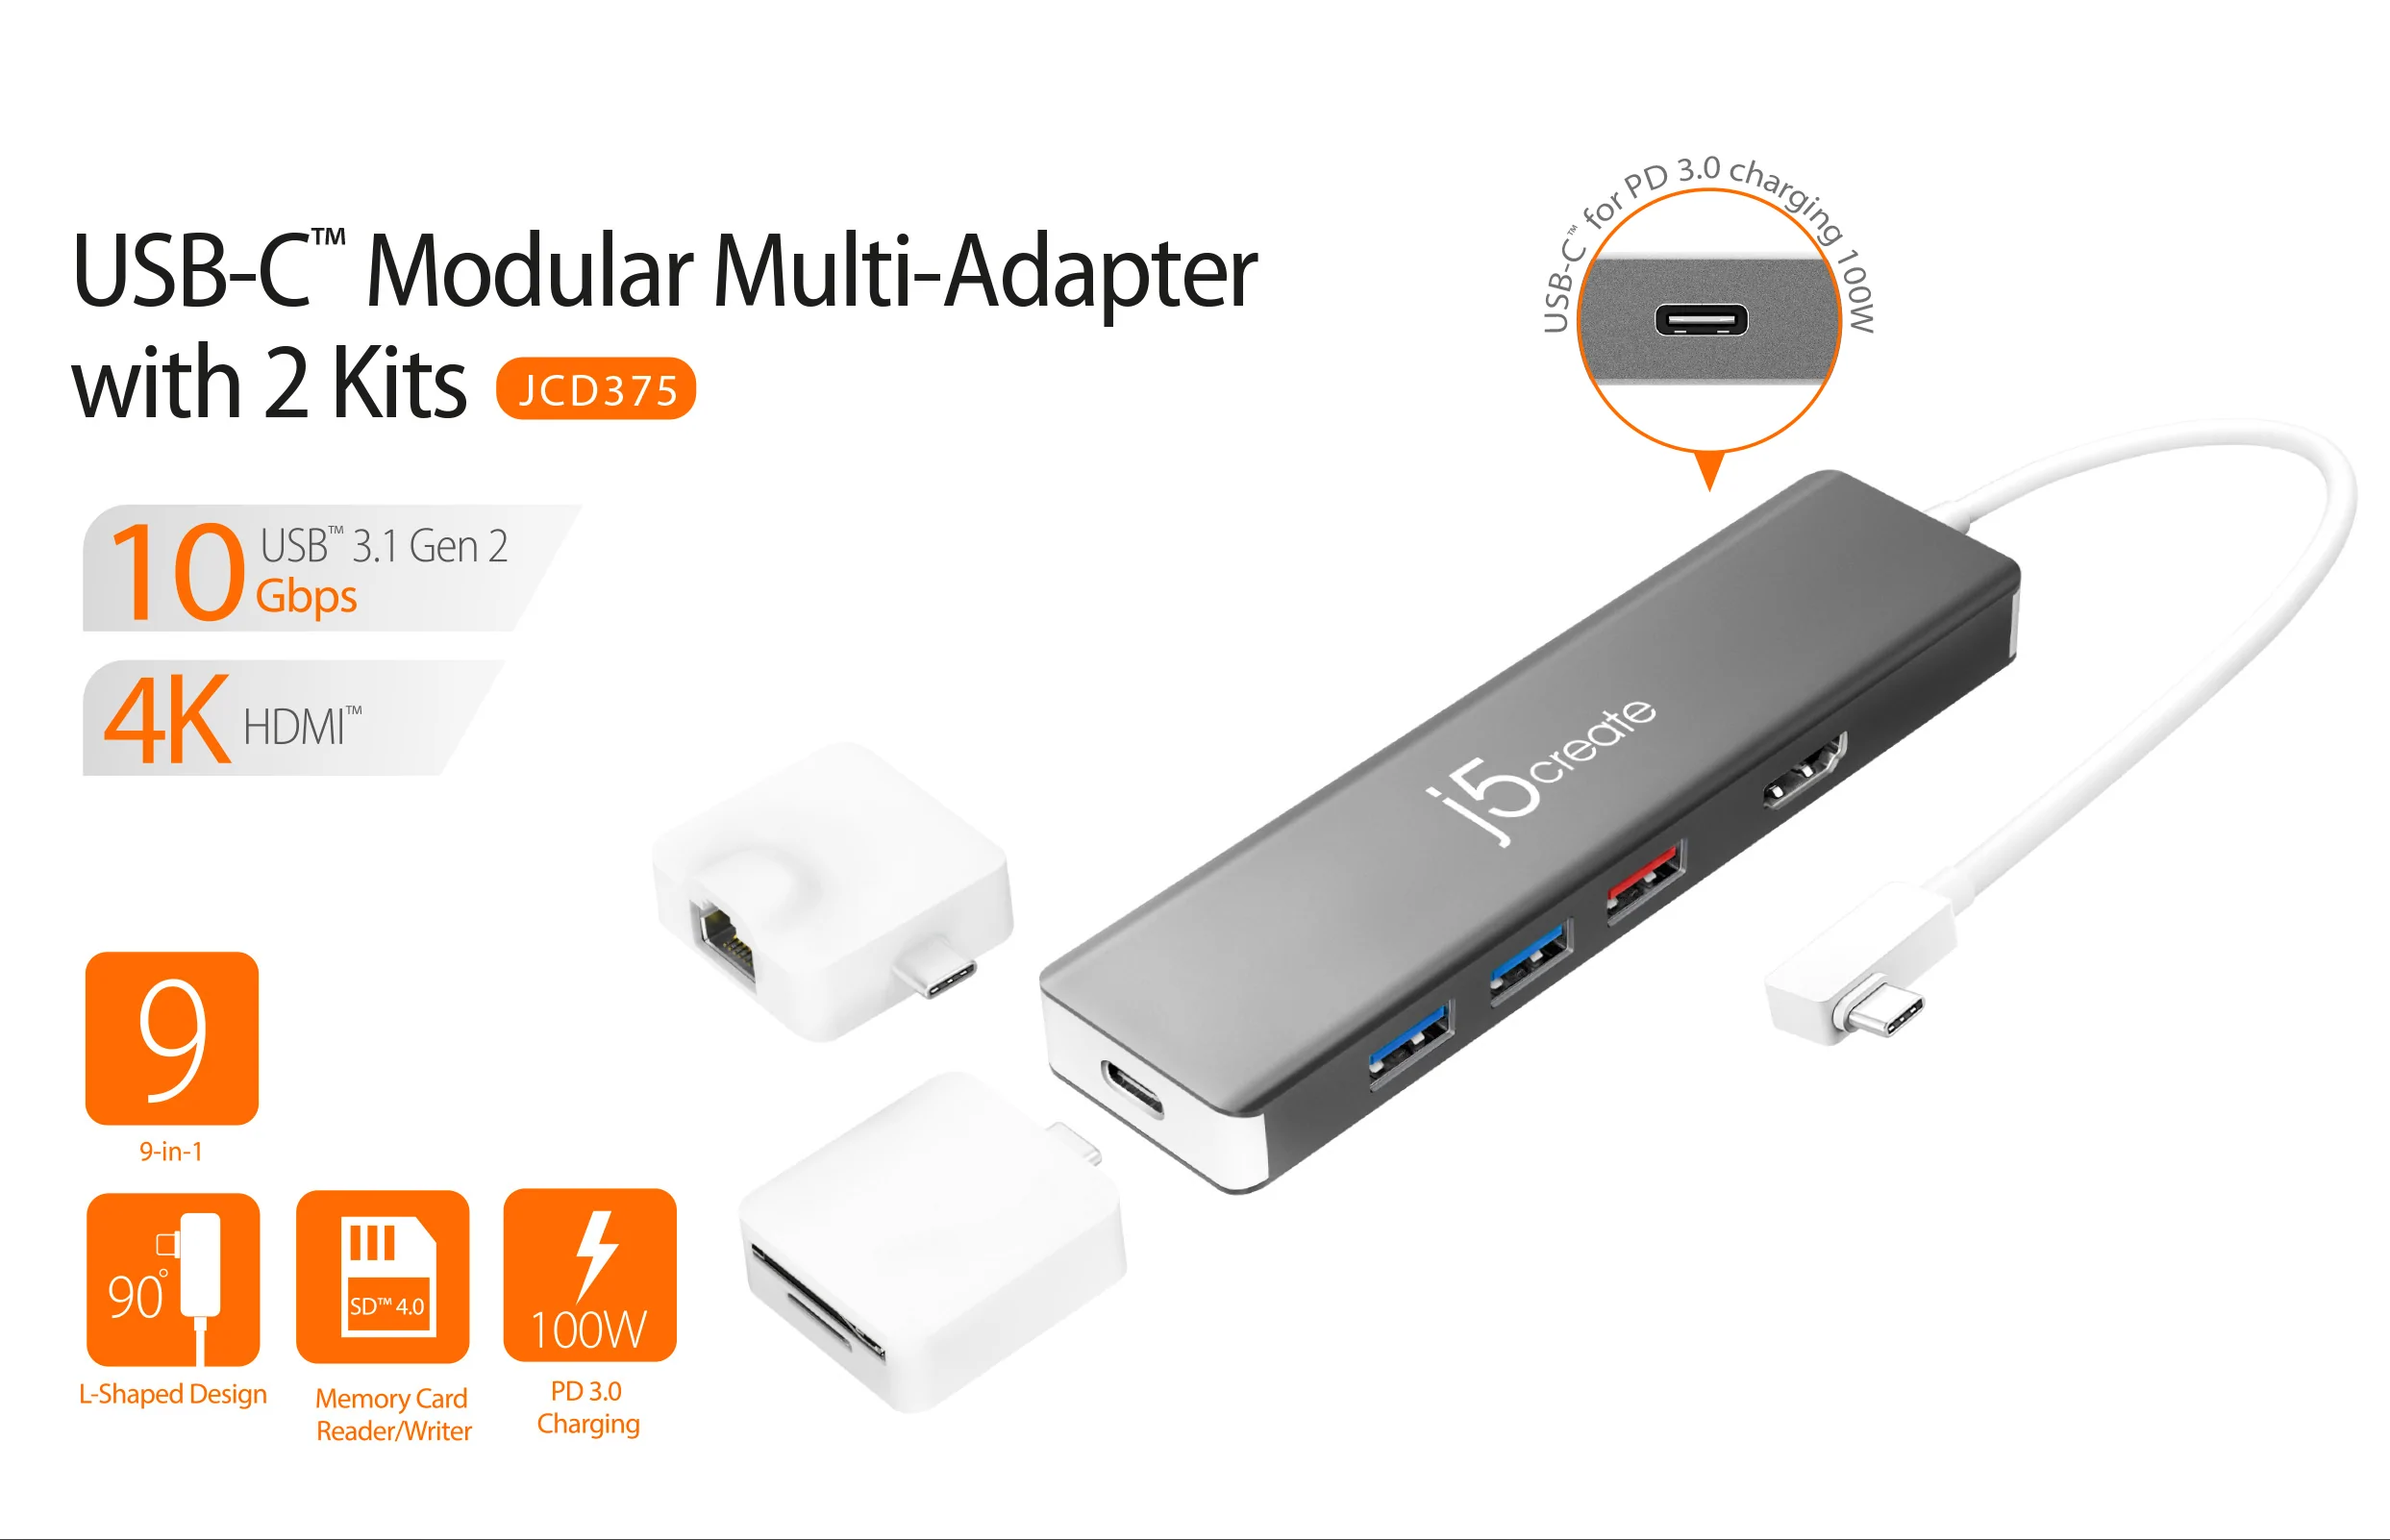 J5 Create USB C Modular Multi-Adapter with 2 Kits - JCD375